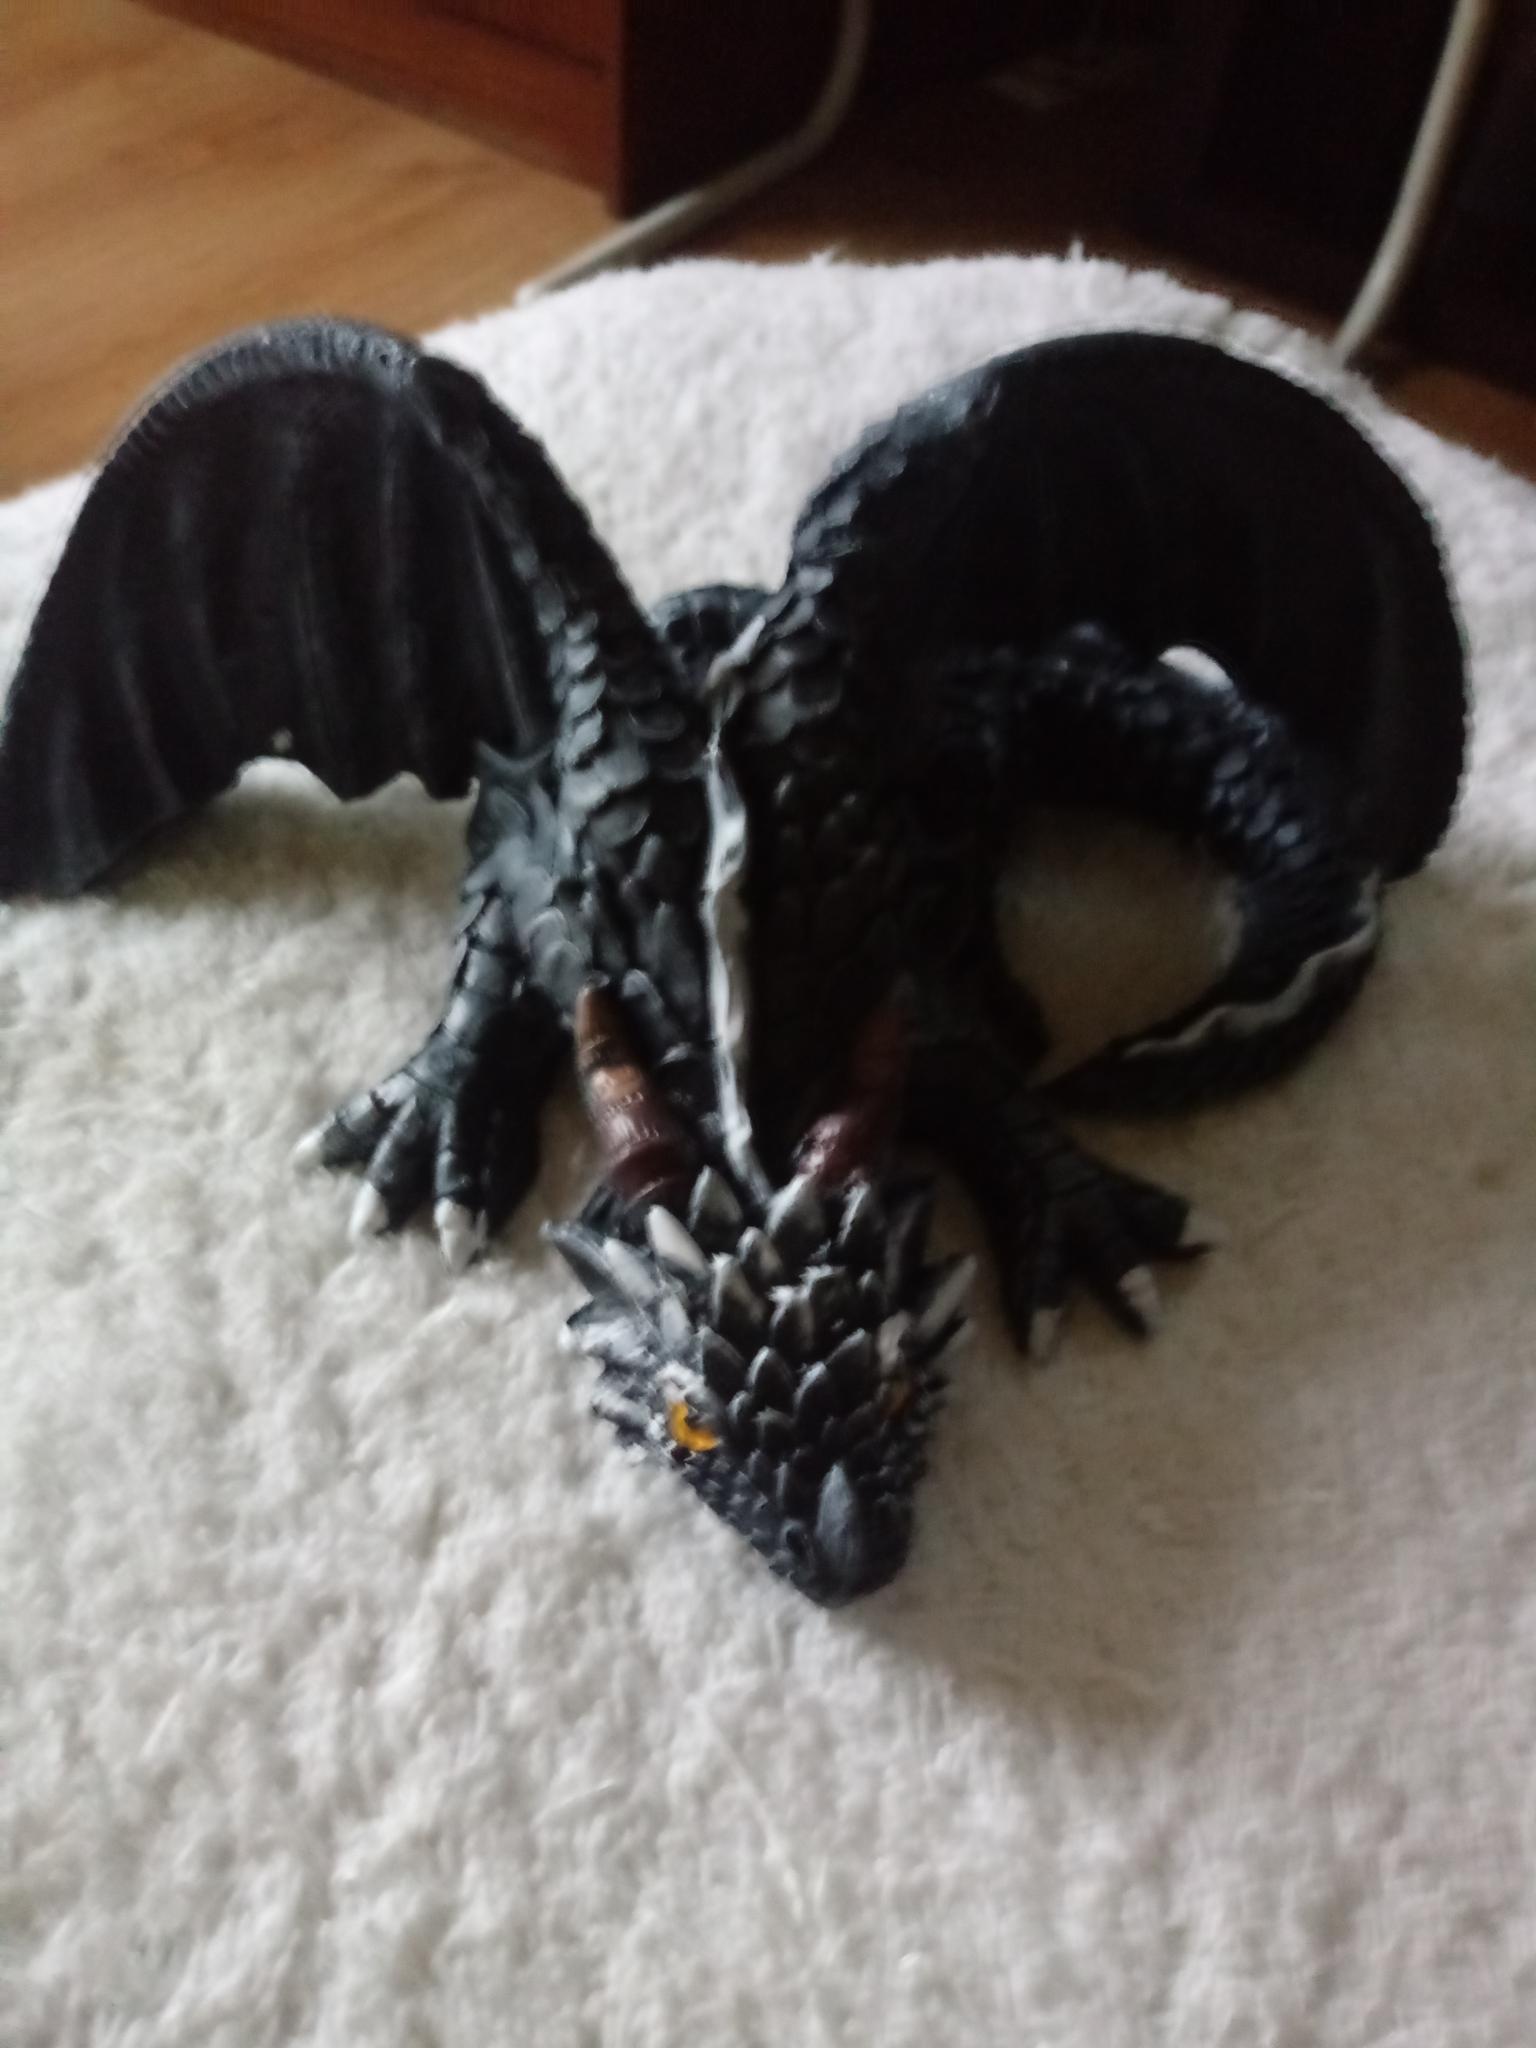 Large Squatting Dragon Sculpture photo review